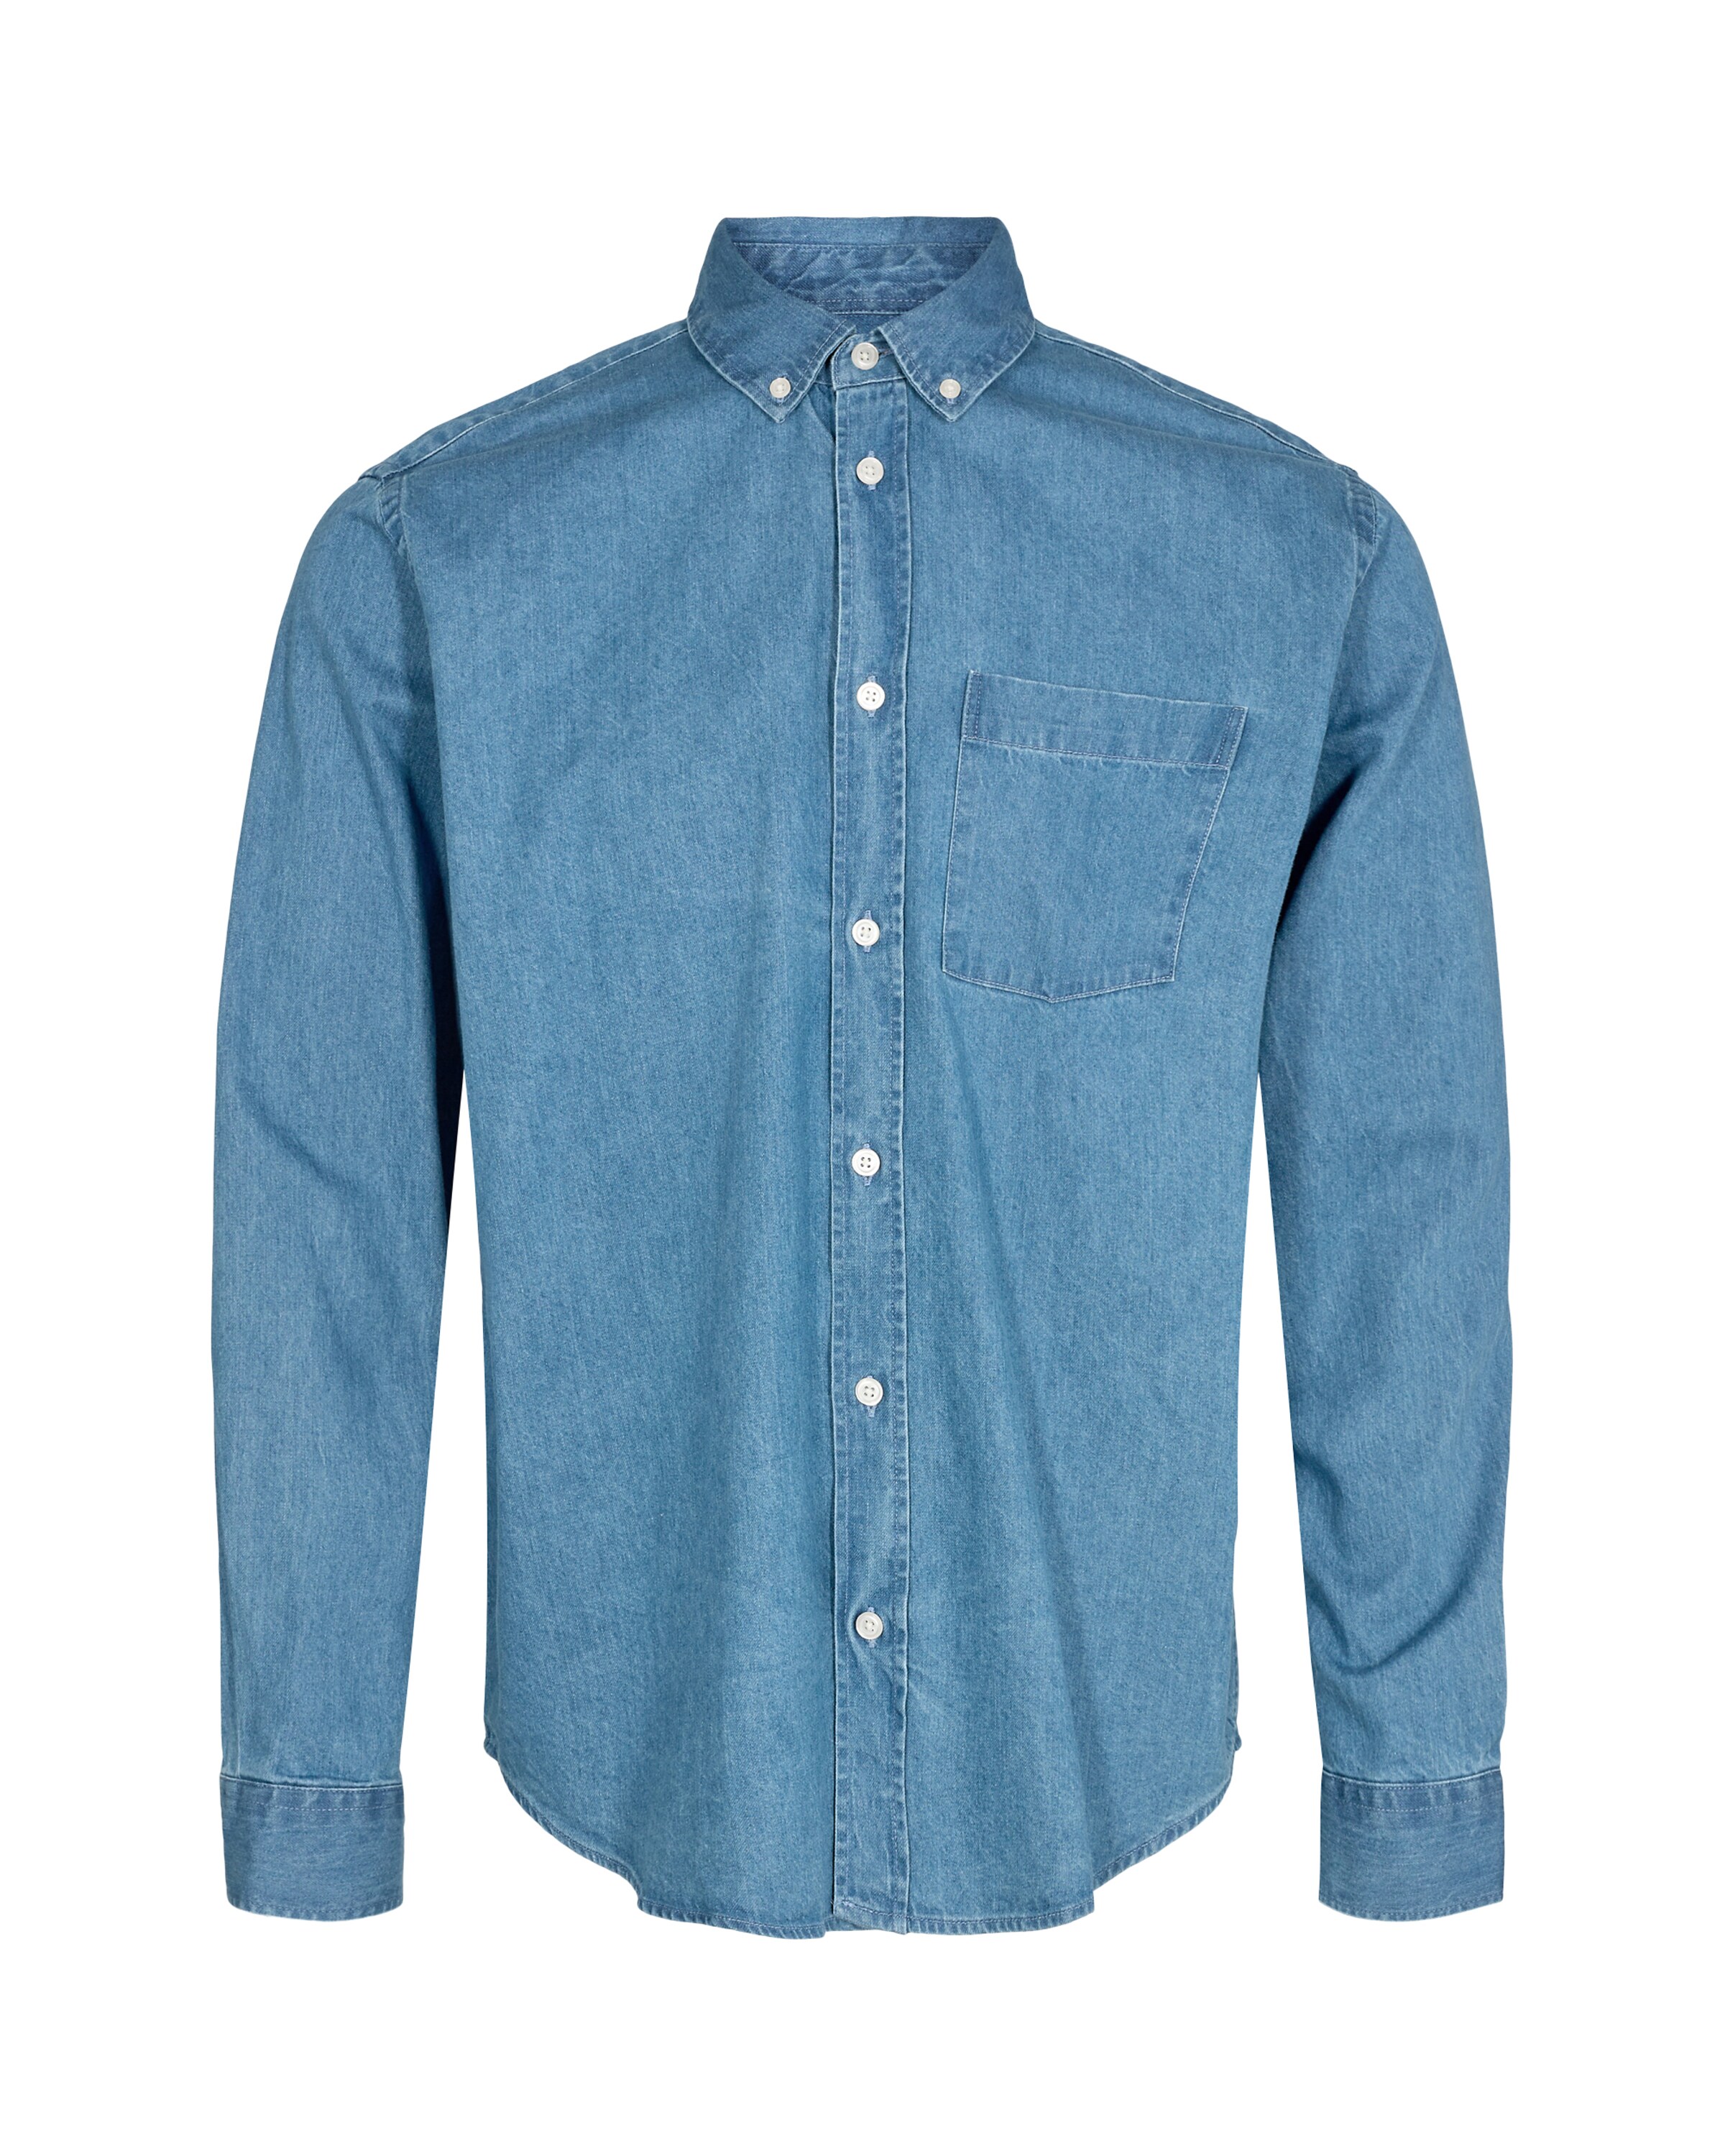 Rabatt 96 % KINDER Hemden & T-Shirts Elegant Blau 8Y BASS10 Hemd 